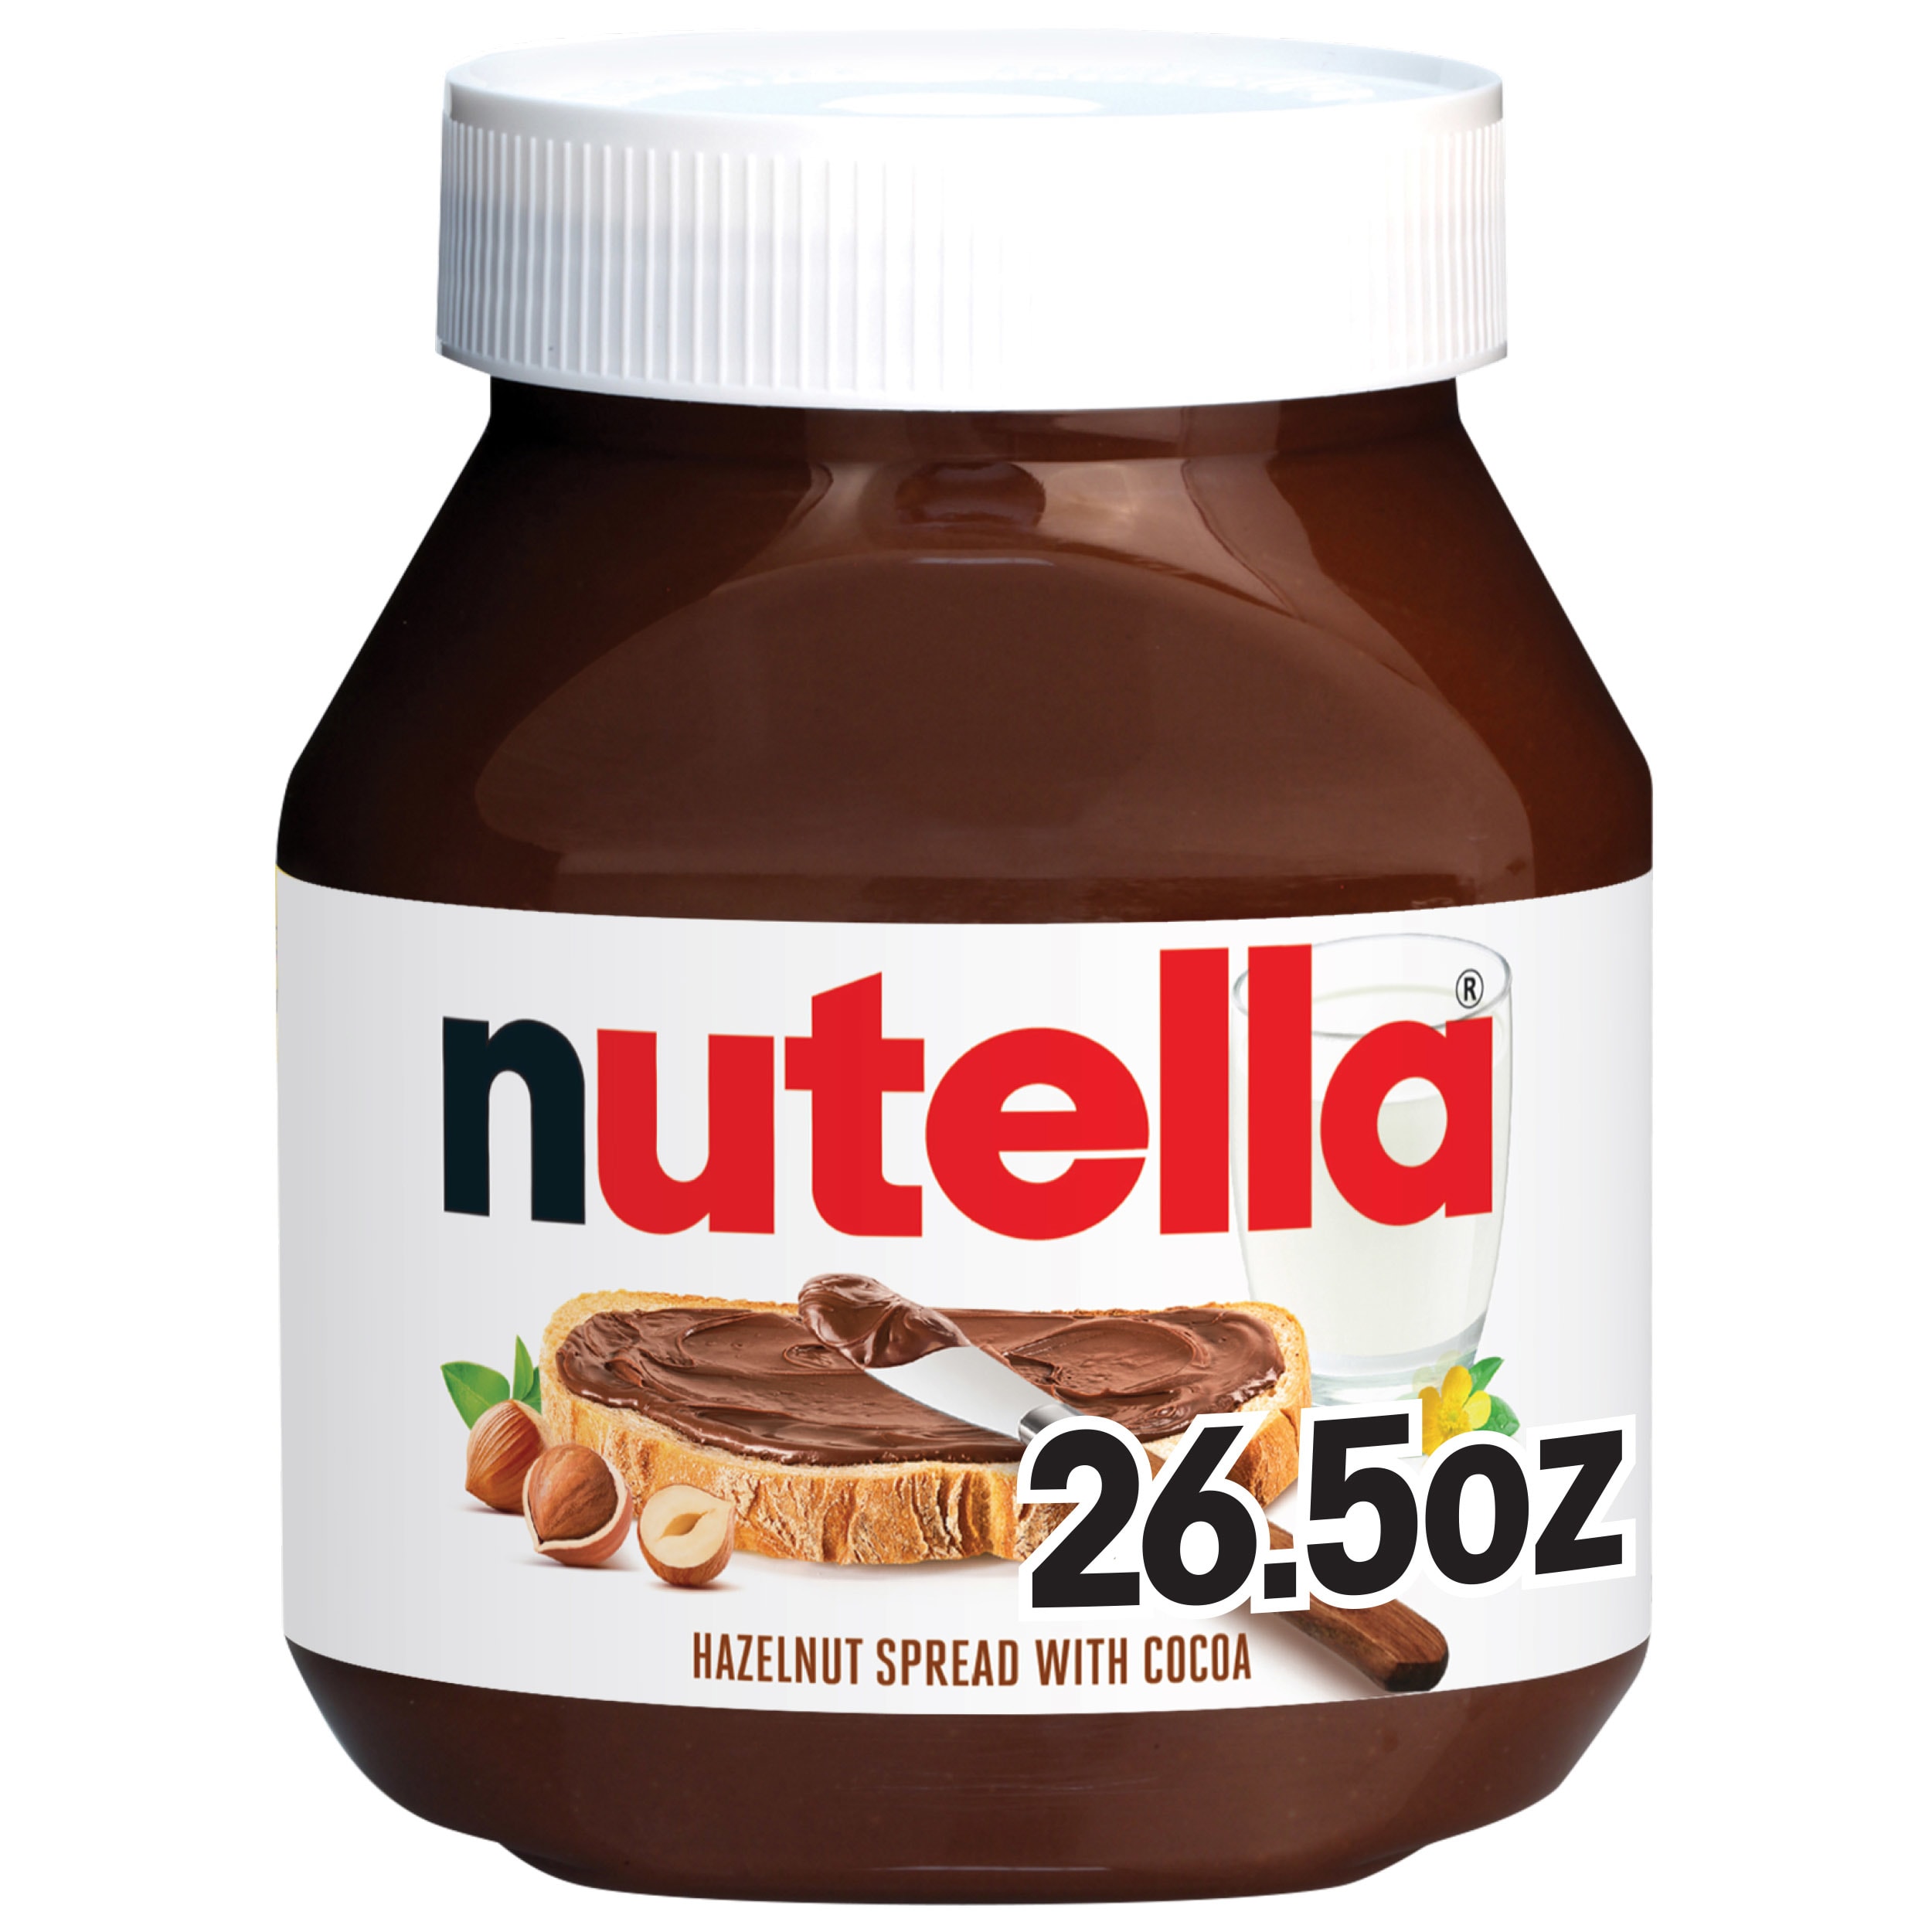 Nutella Hazelnut Spread with Cocoa for Breakfast, 26.5 oz Jar - image 1 of 10